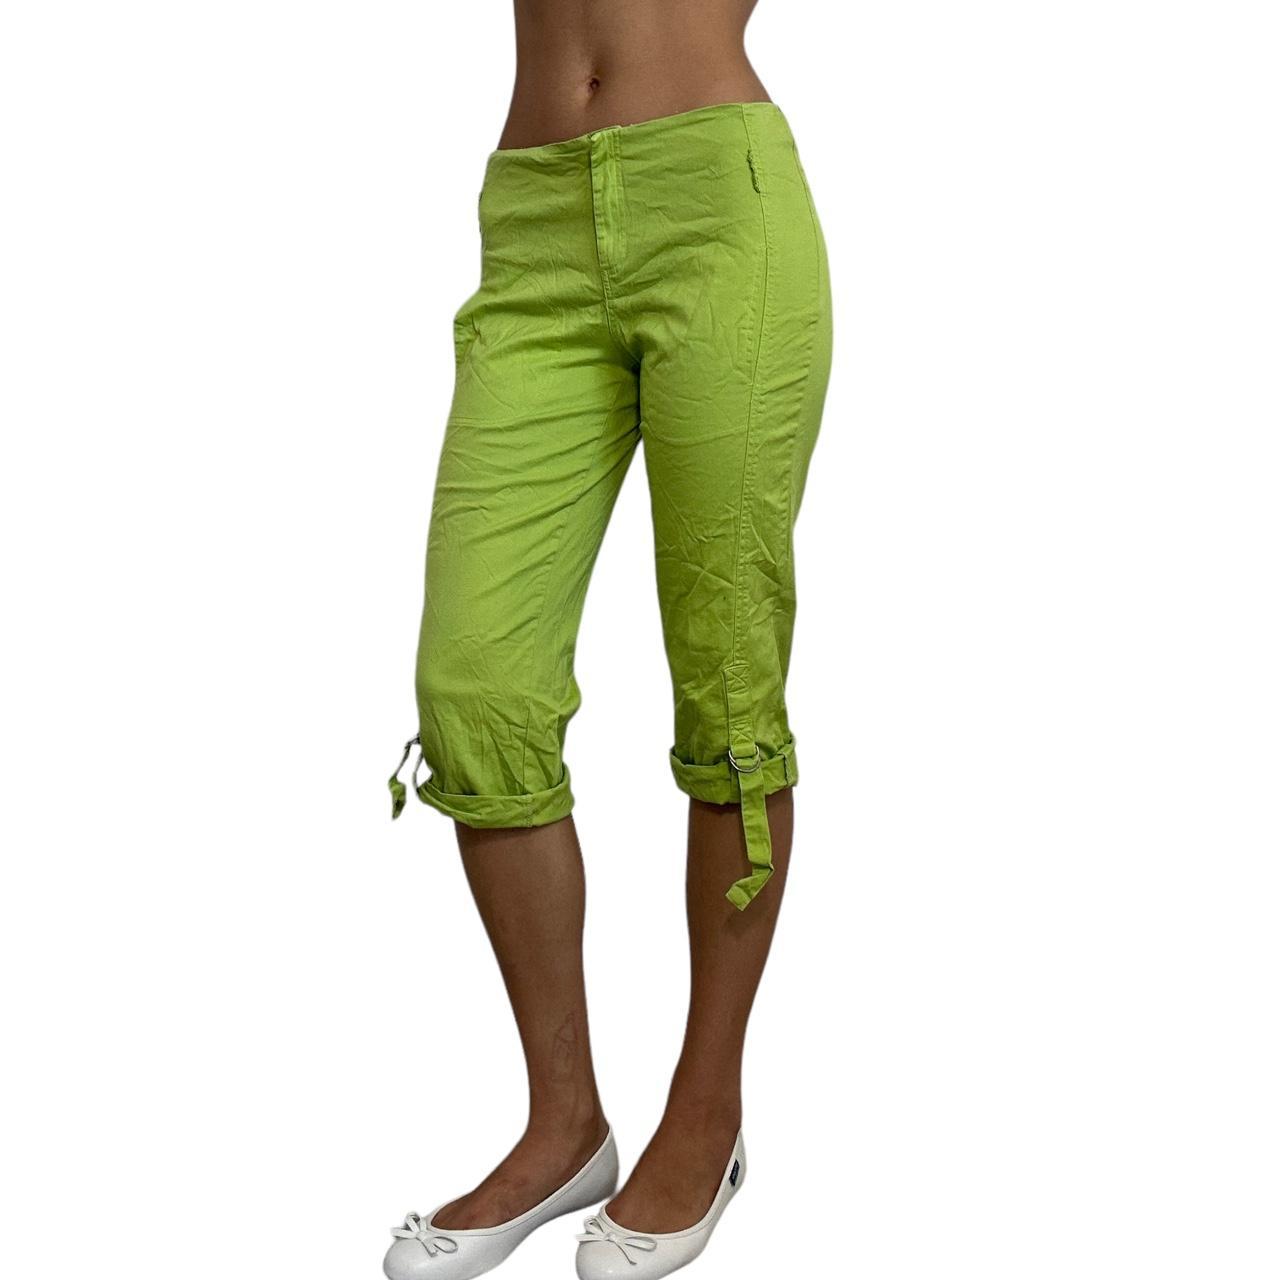 Y2k capri pants green low rise pants, Vintage 2000s